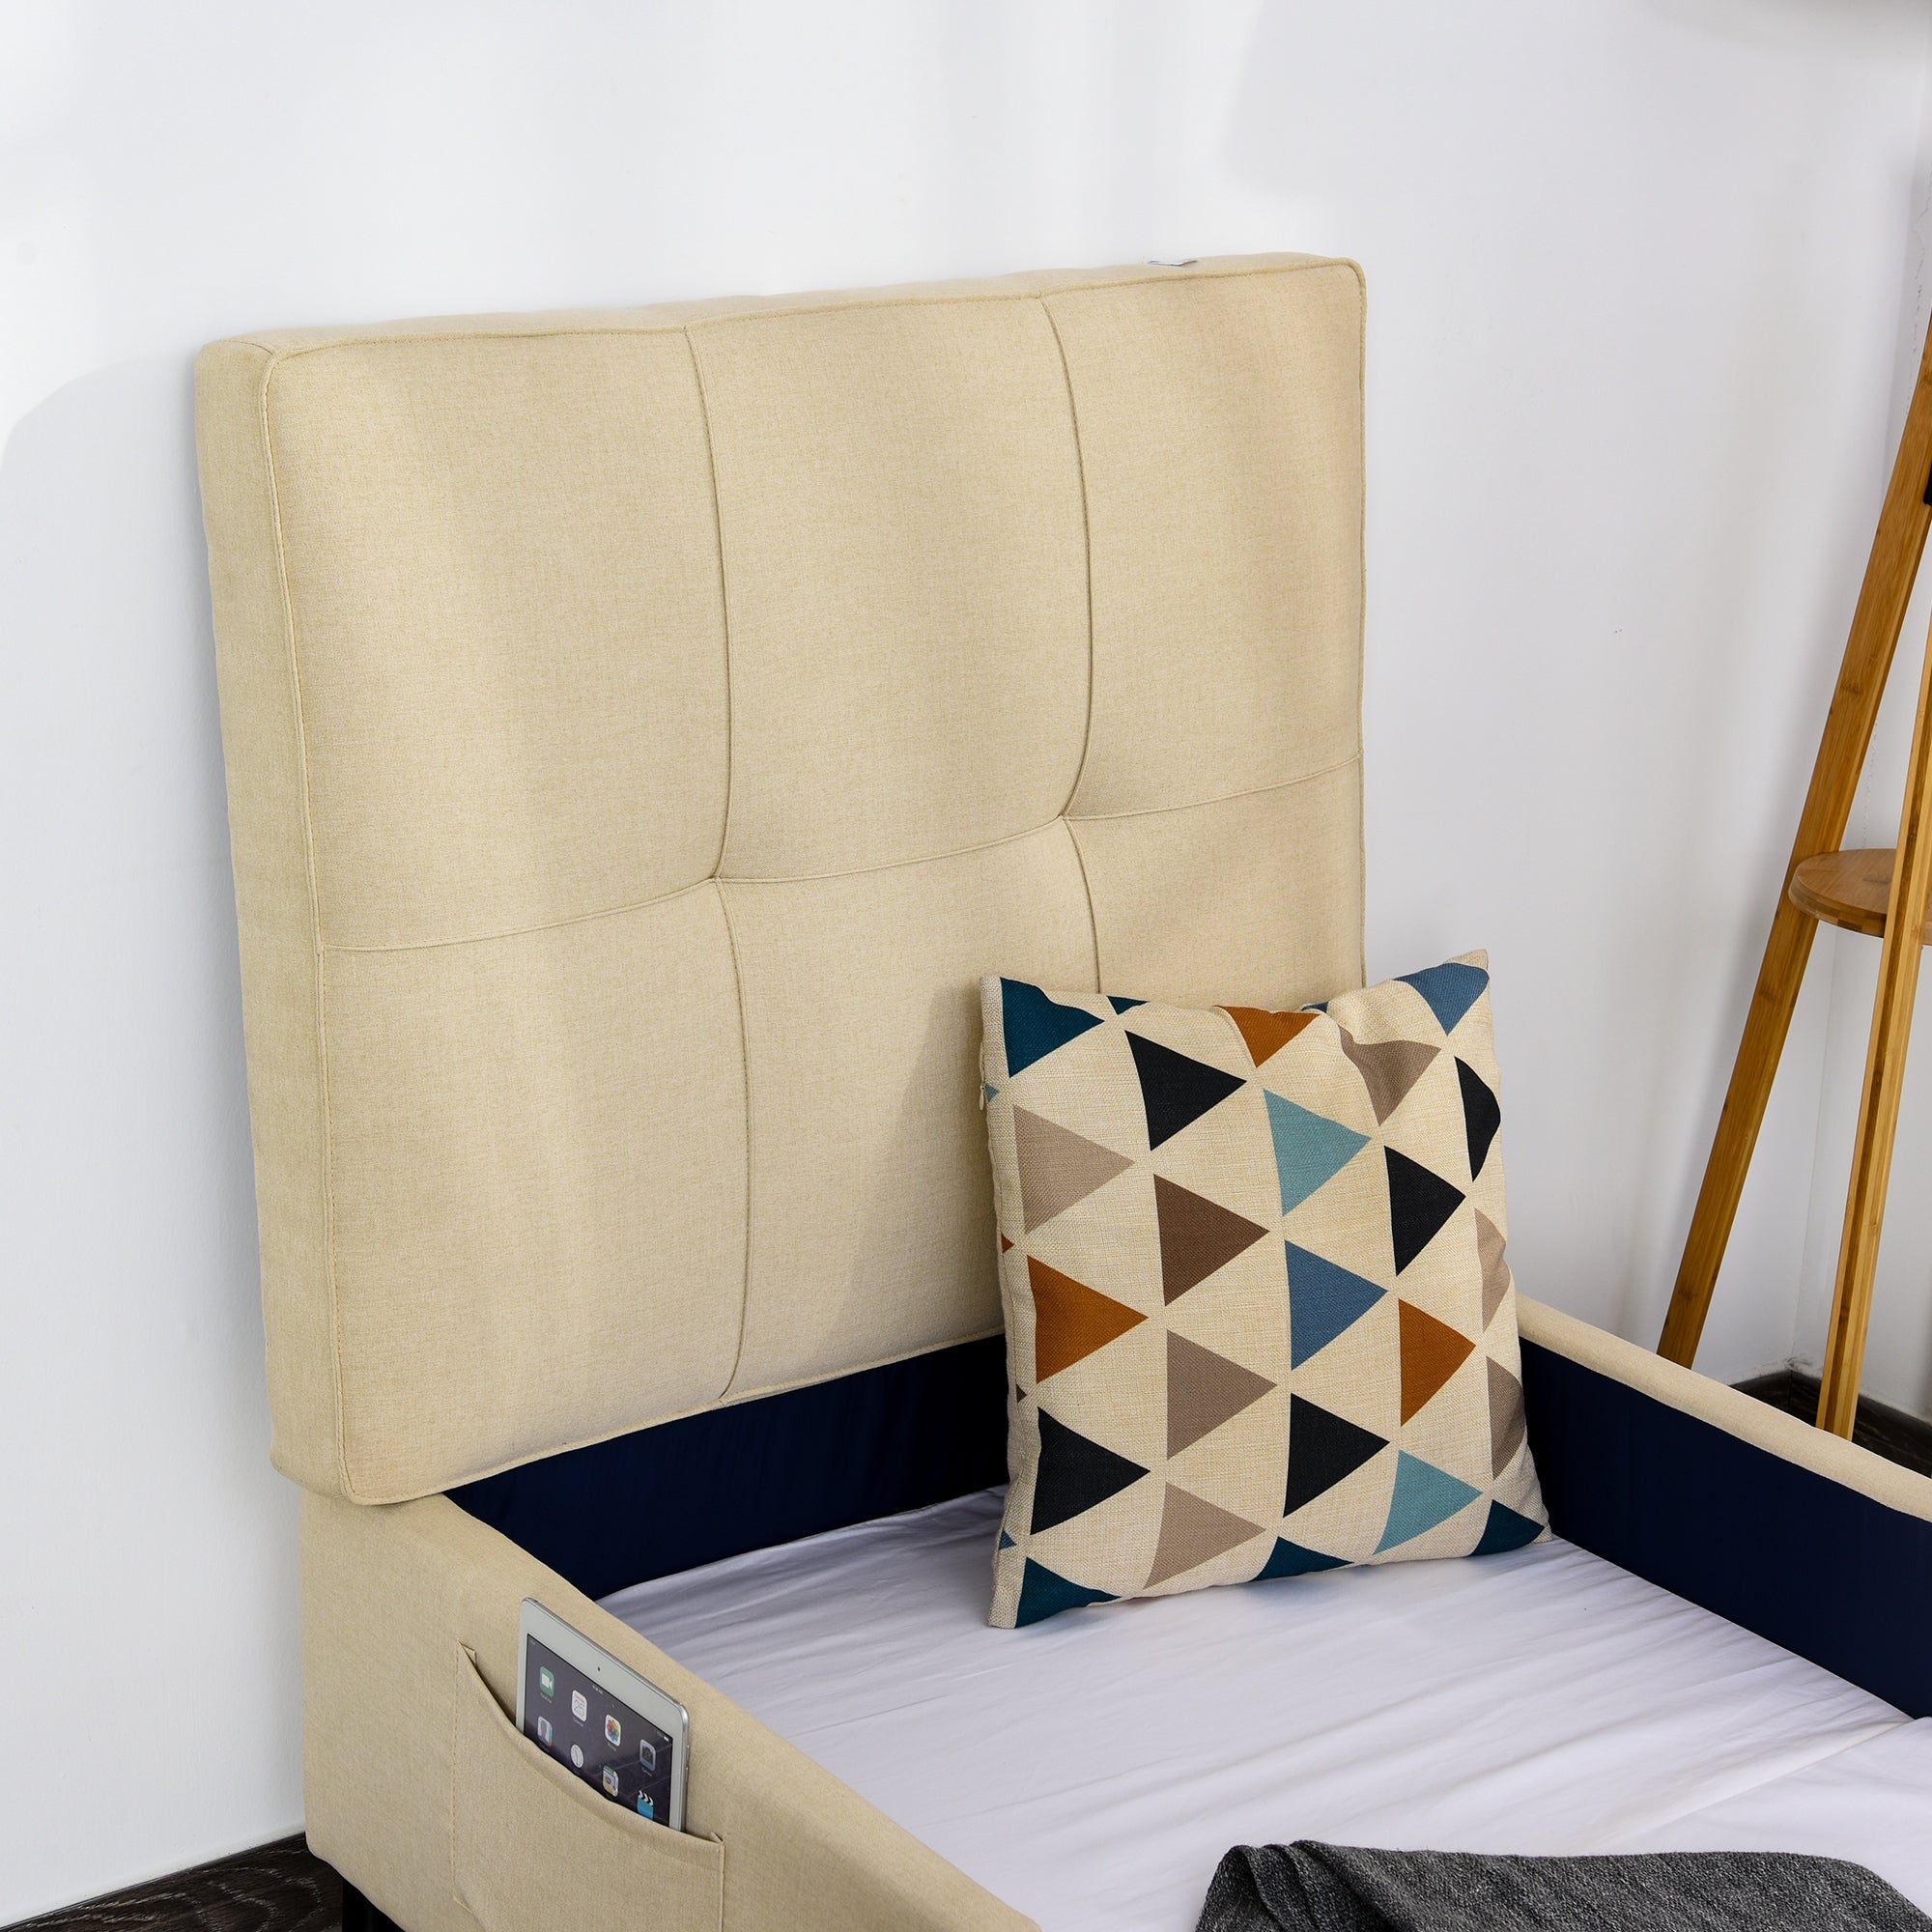 گریت کابینت | شرکت کابینت آشپزخانه گریت | HOMCOM 2 In 1 Design Convertible Footrest Stool Single Sofa Bed with Side Pocket and Metal Frame for Living Room Bedroom min